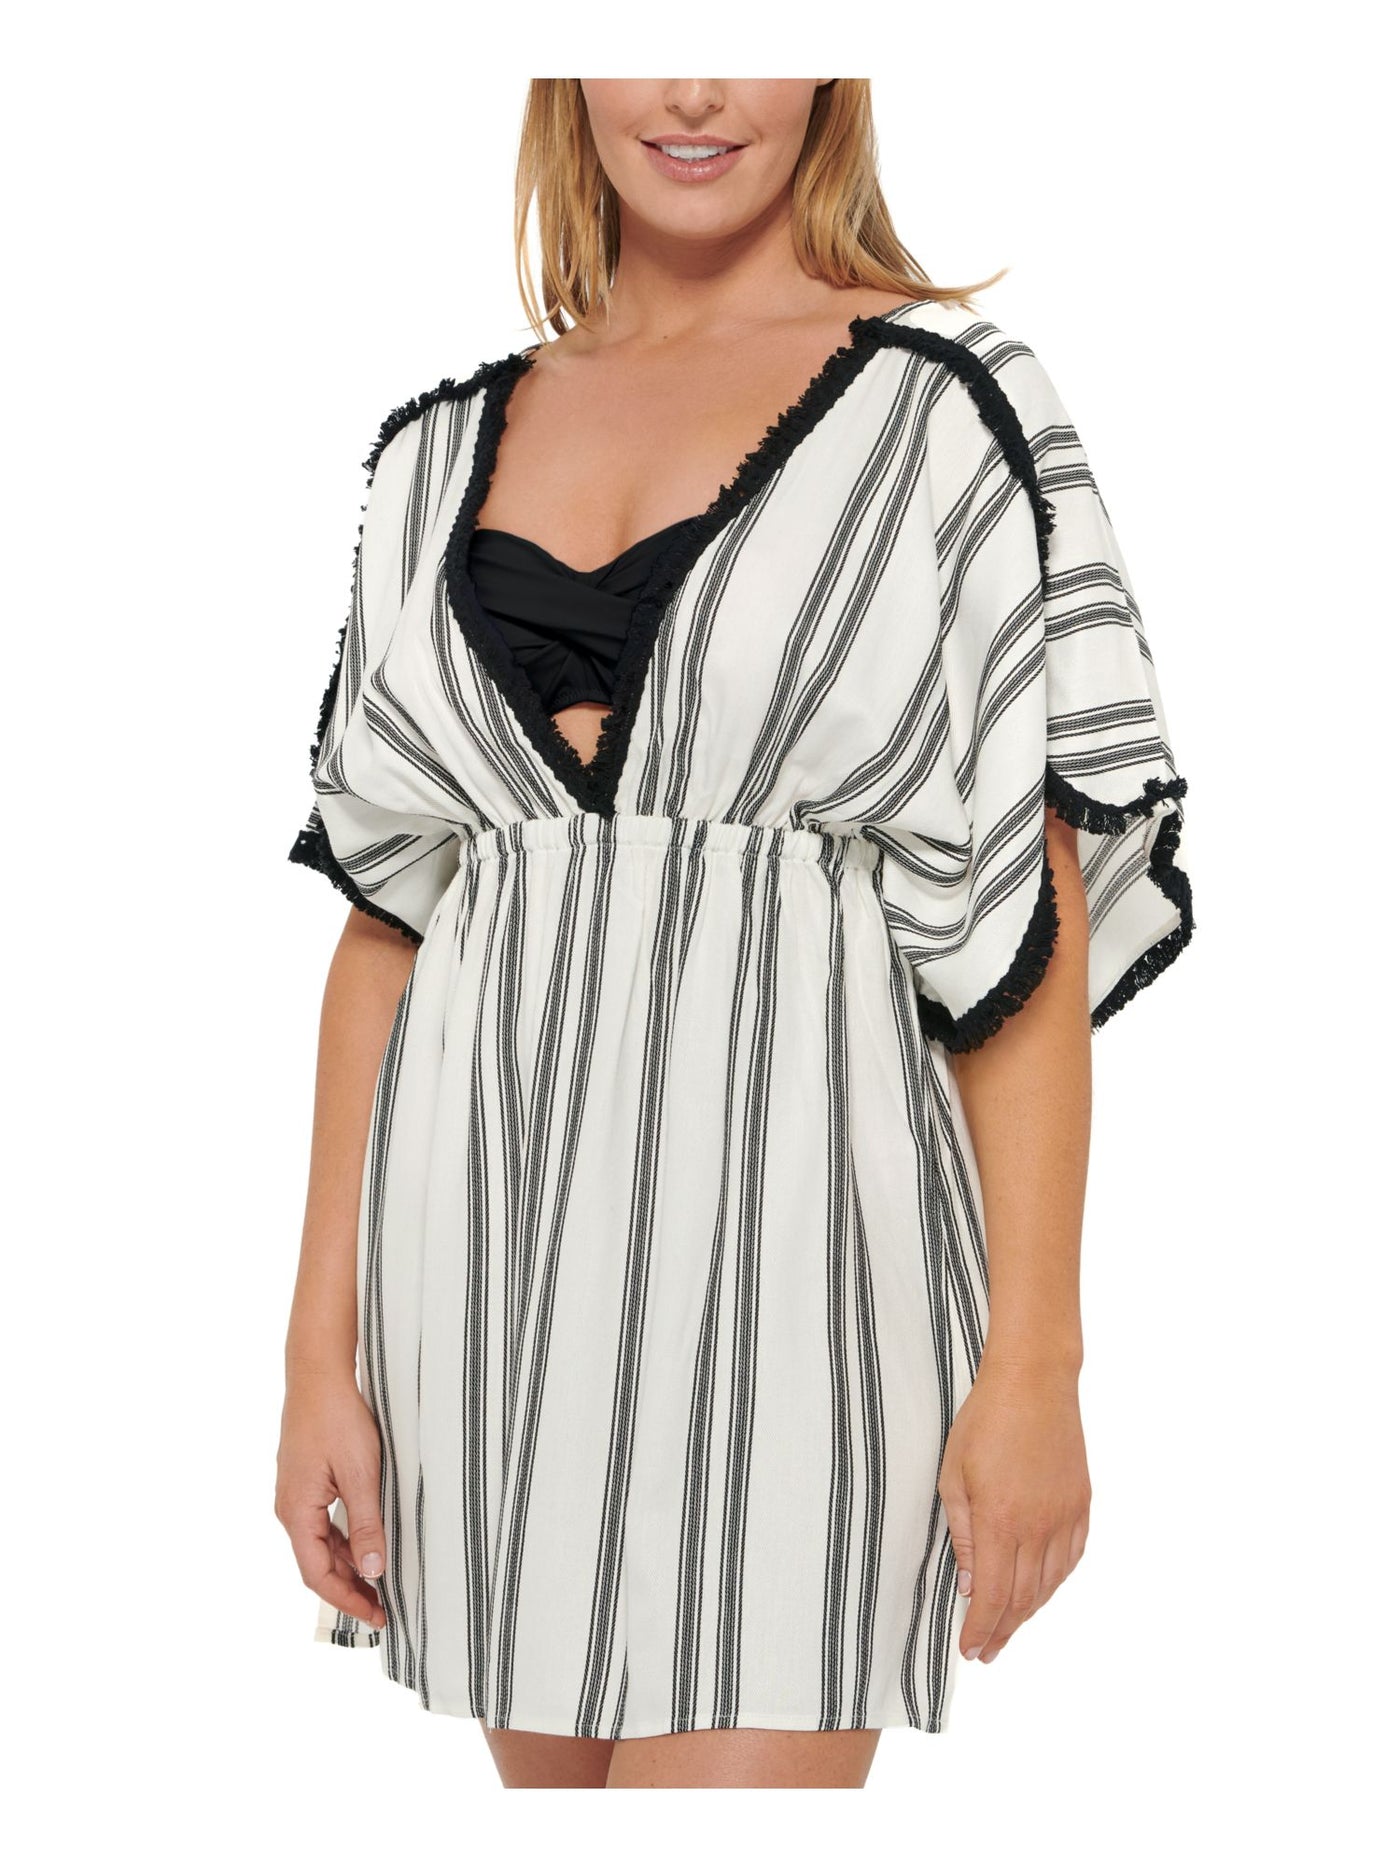 DOTTI Women's White Striped Fringed-Trim Dress Deep V Neck Tie Newport Swimsuit Cover Up L